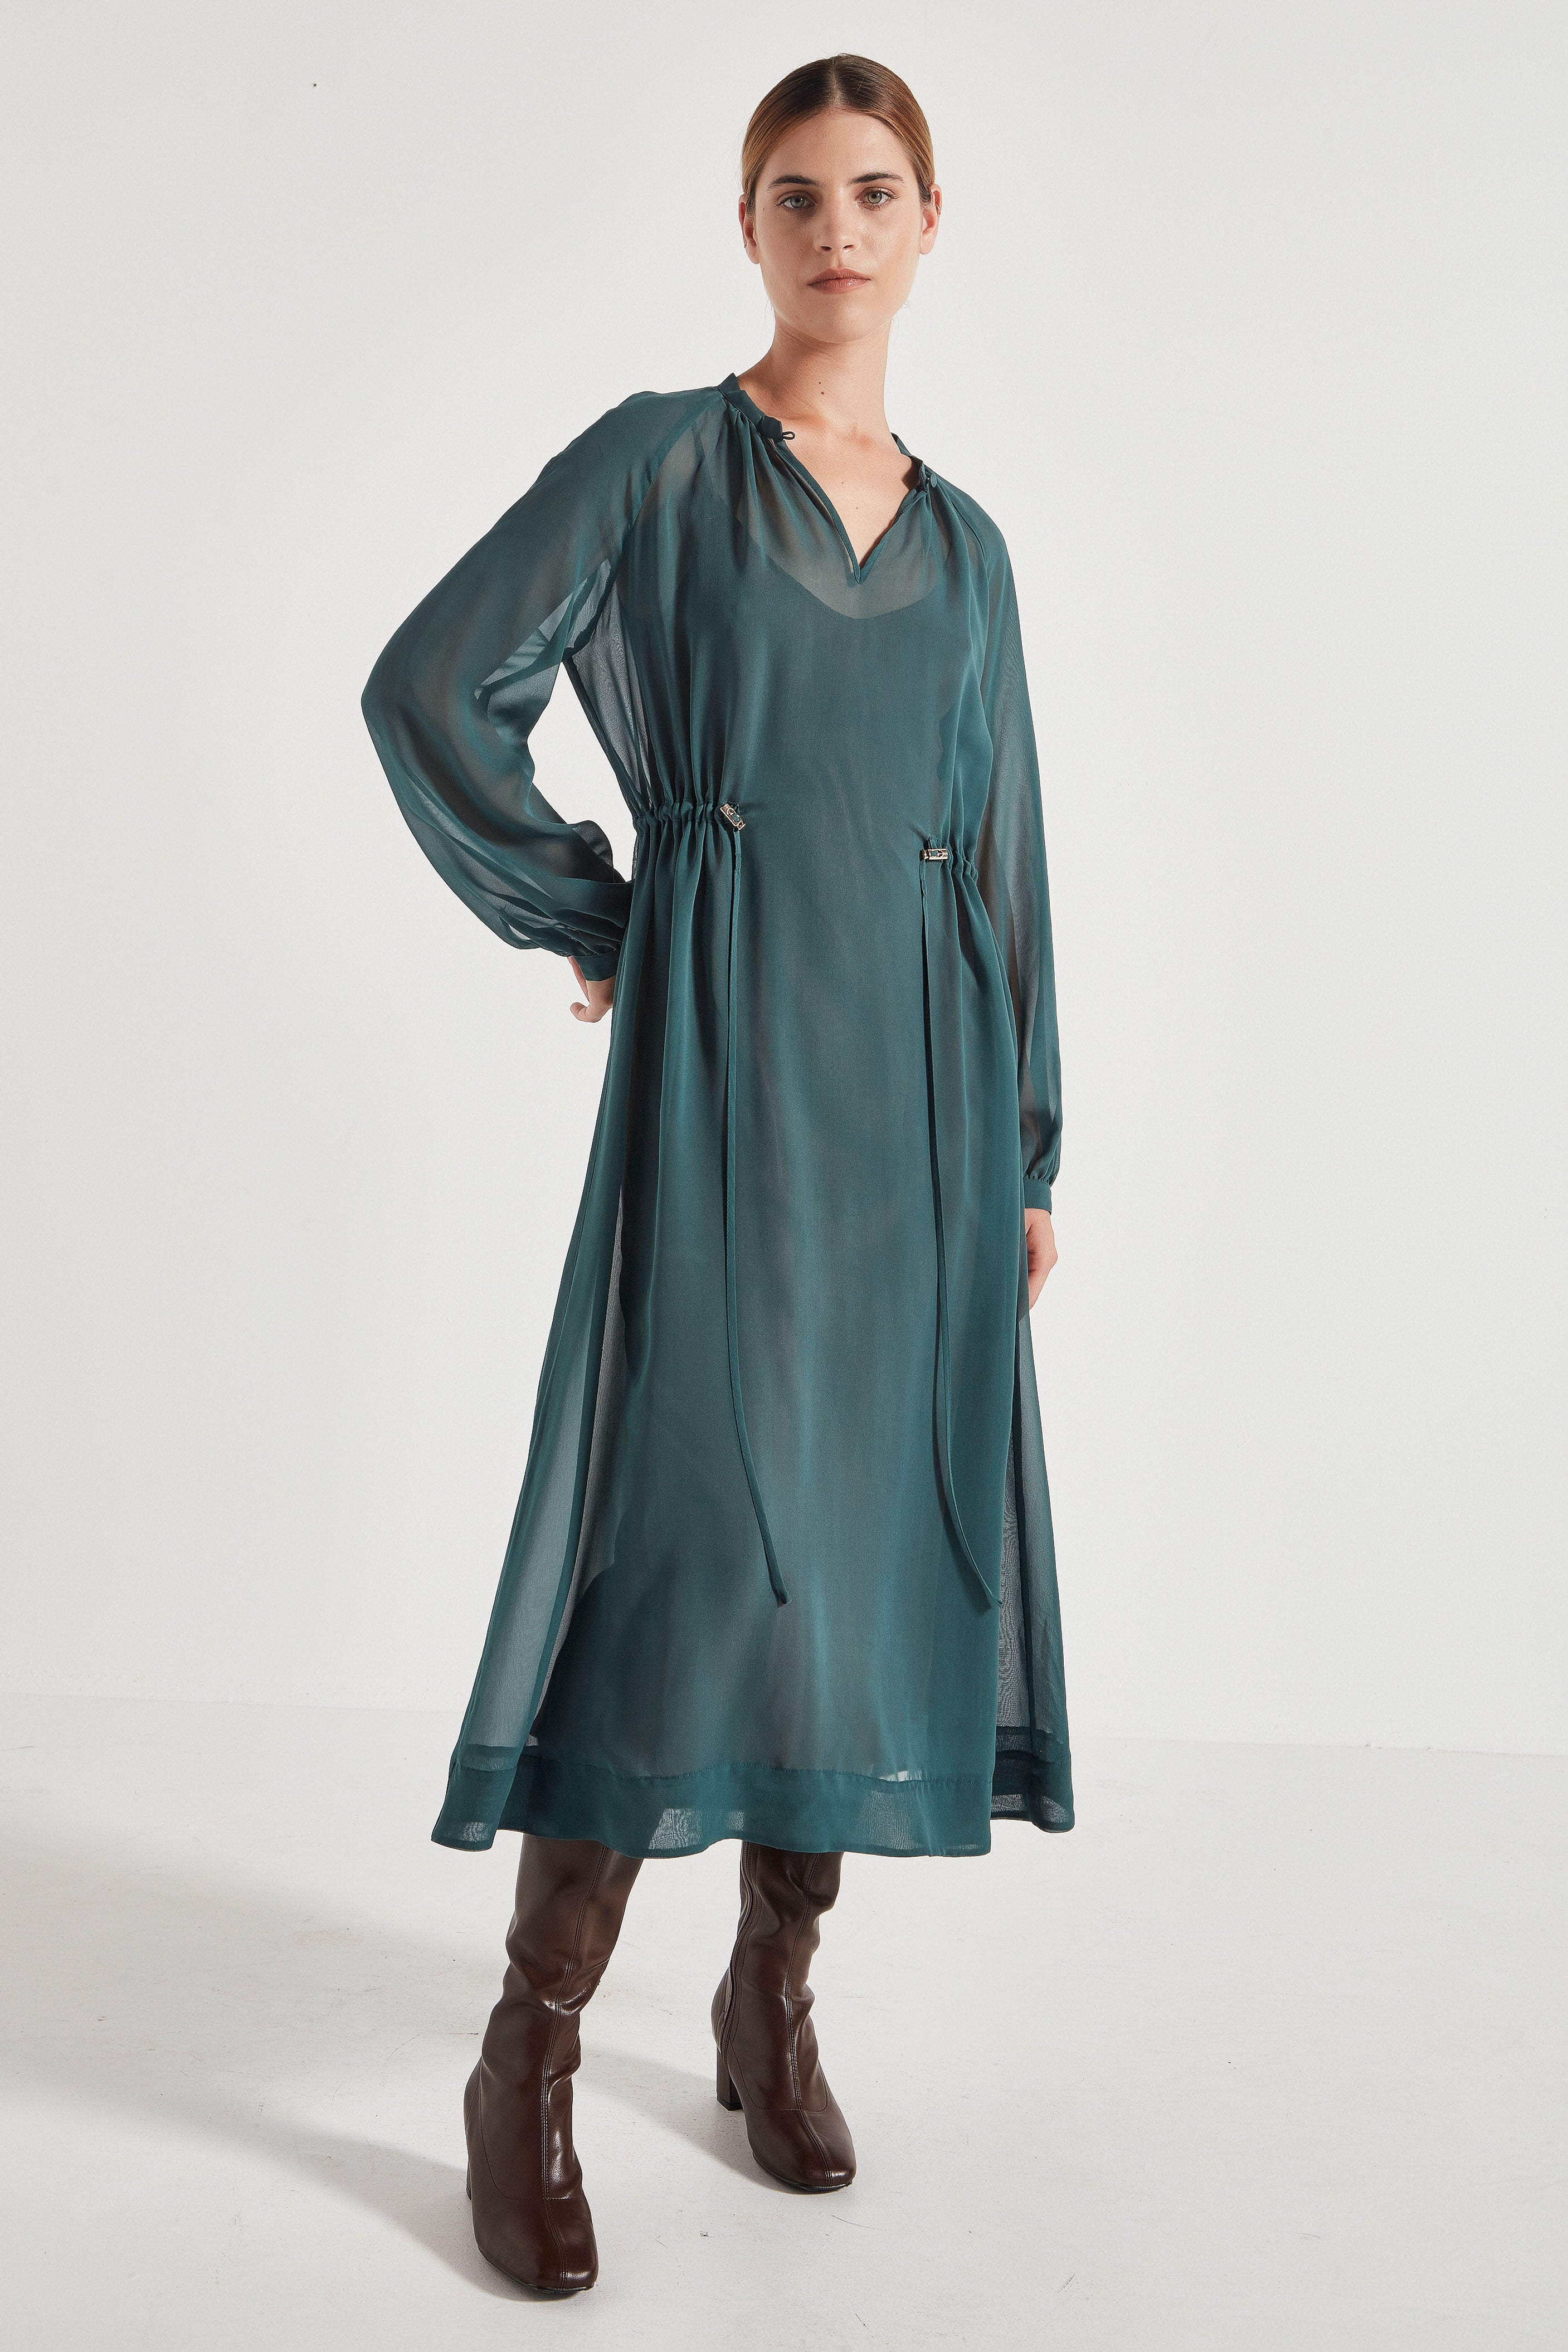 The Otto Dress in Jade Silk Chiffon